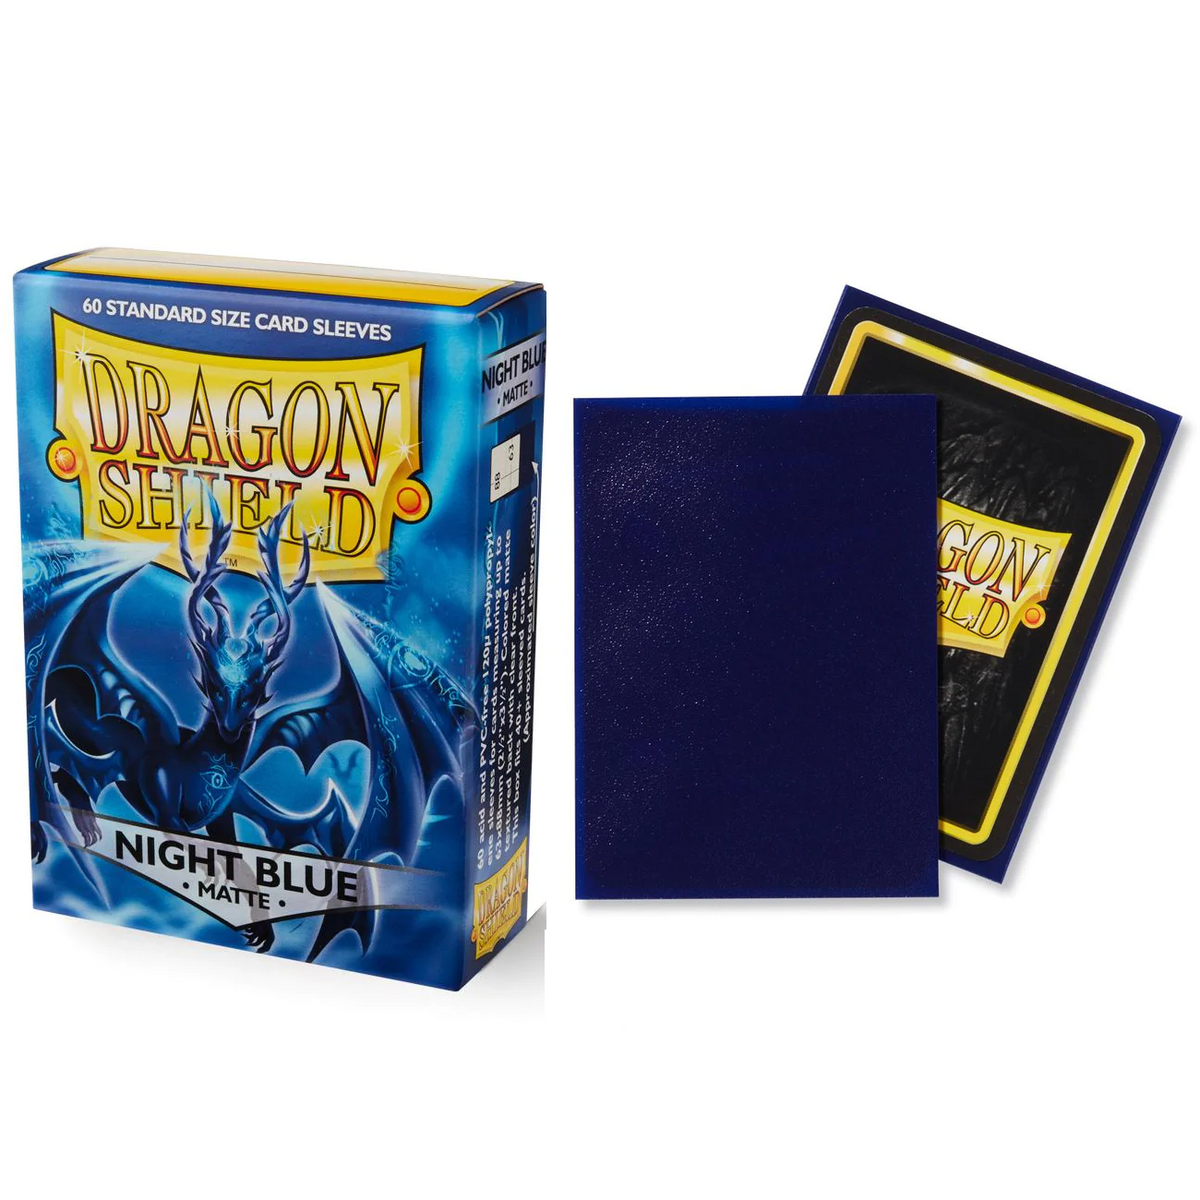 Dragon Shield Sleeve Matte Standard Size 60pcs - Matte Night Blue